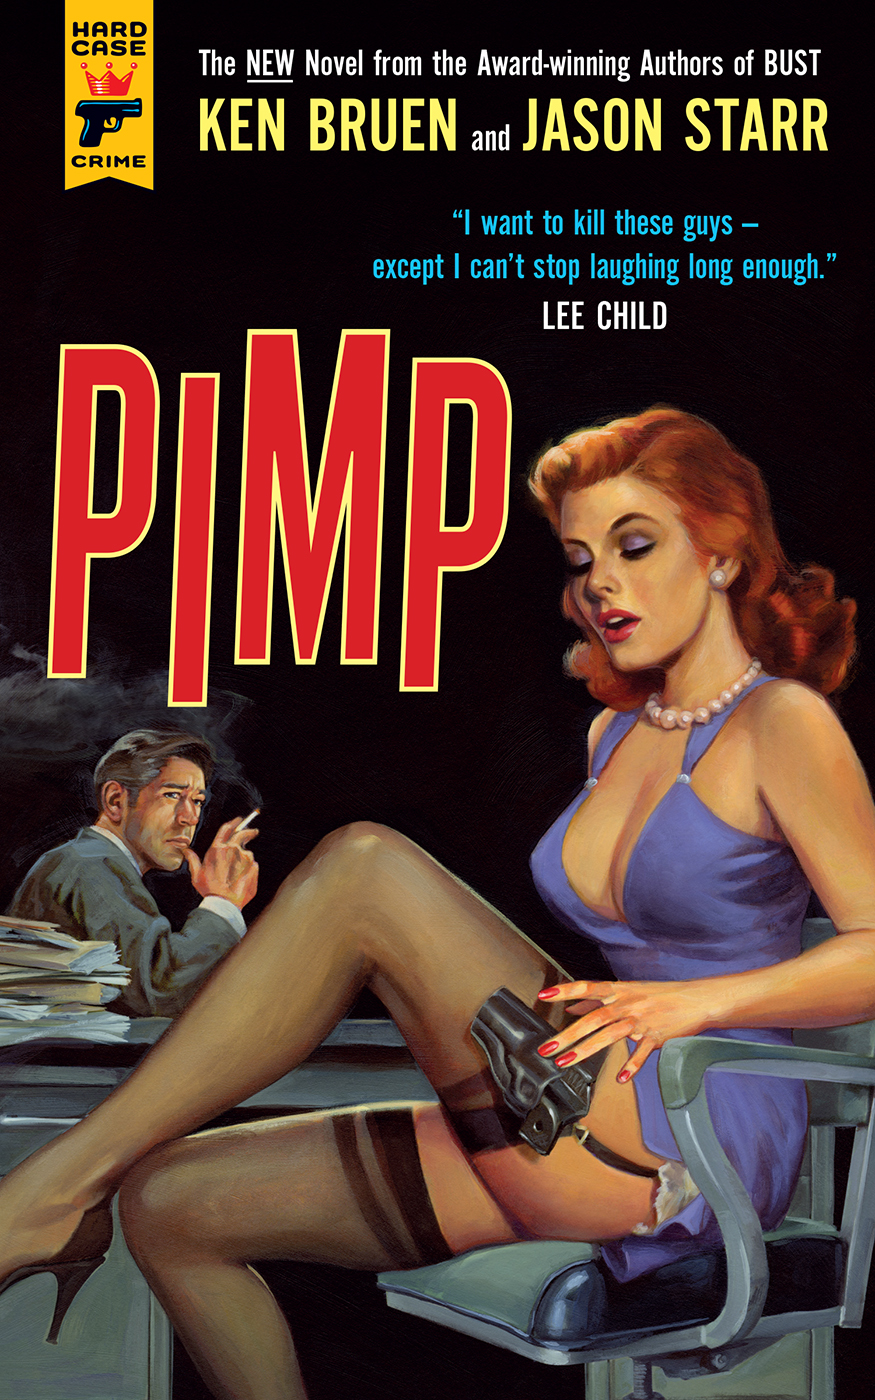 Pimp by Ken Bruen